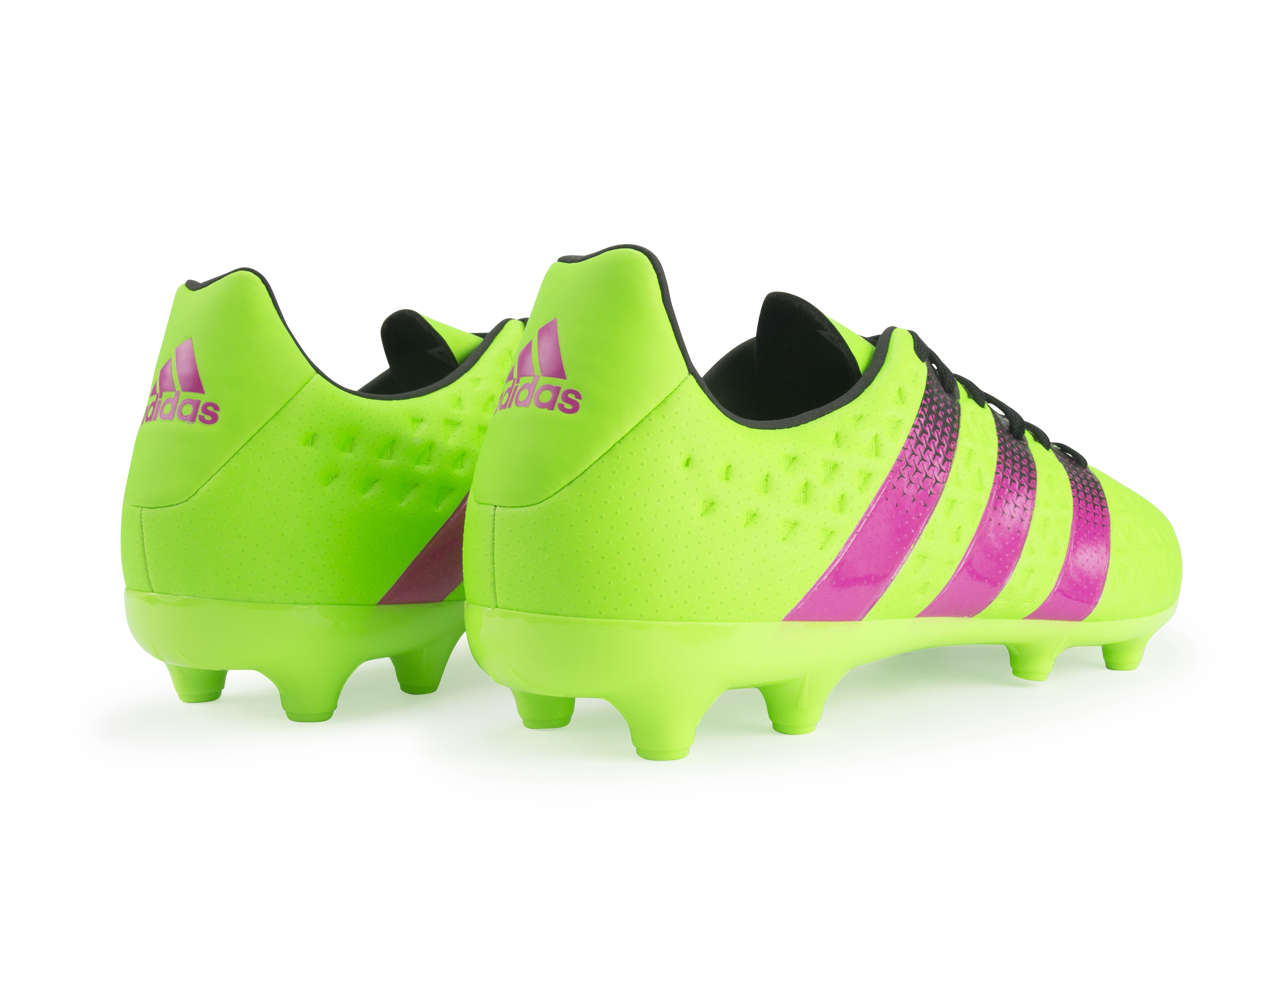 adidas Men's ACE 16.3 FG/AG Solar Green/Black/Shock Pink